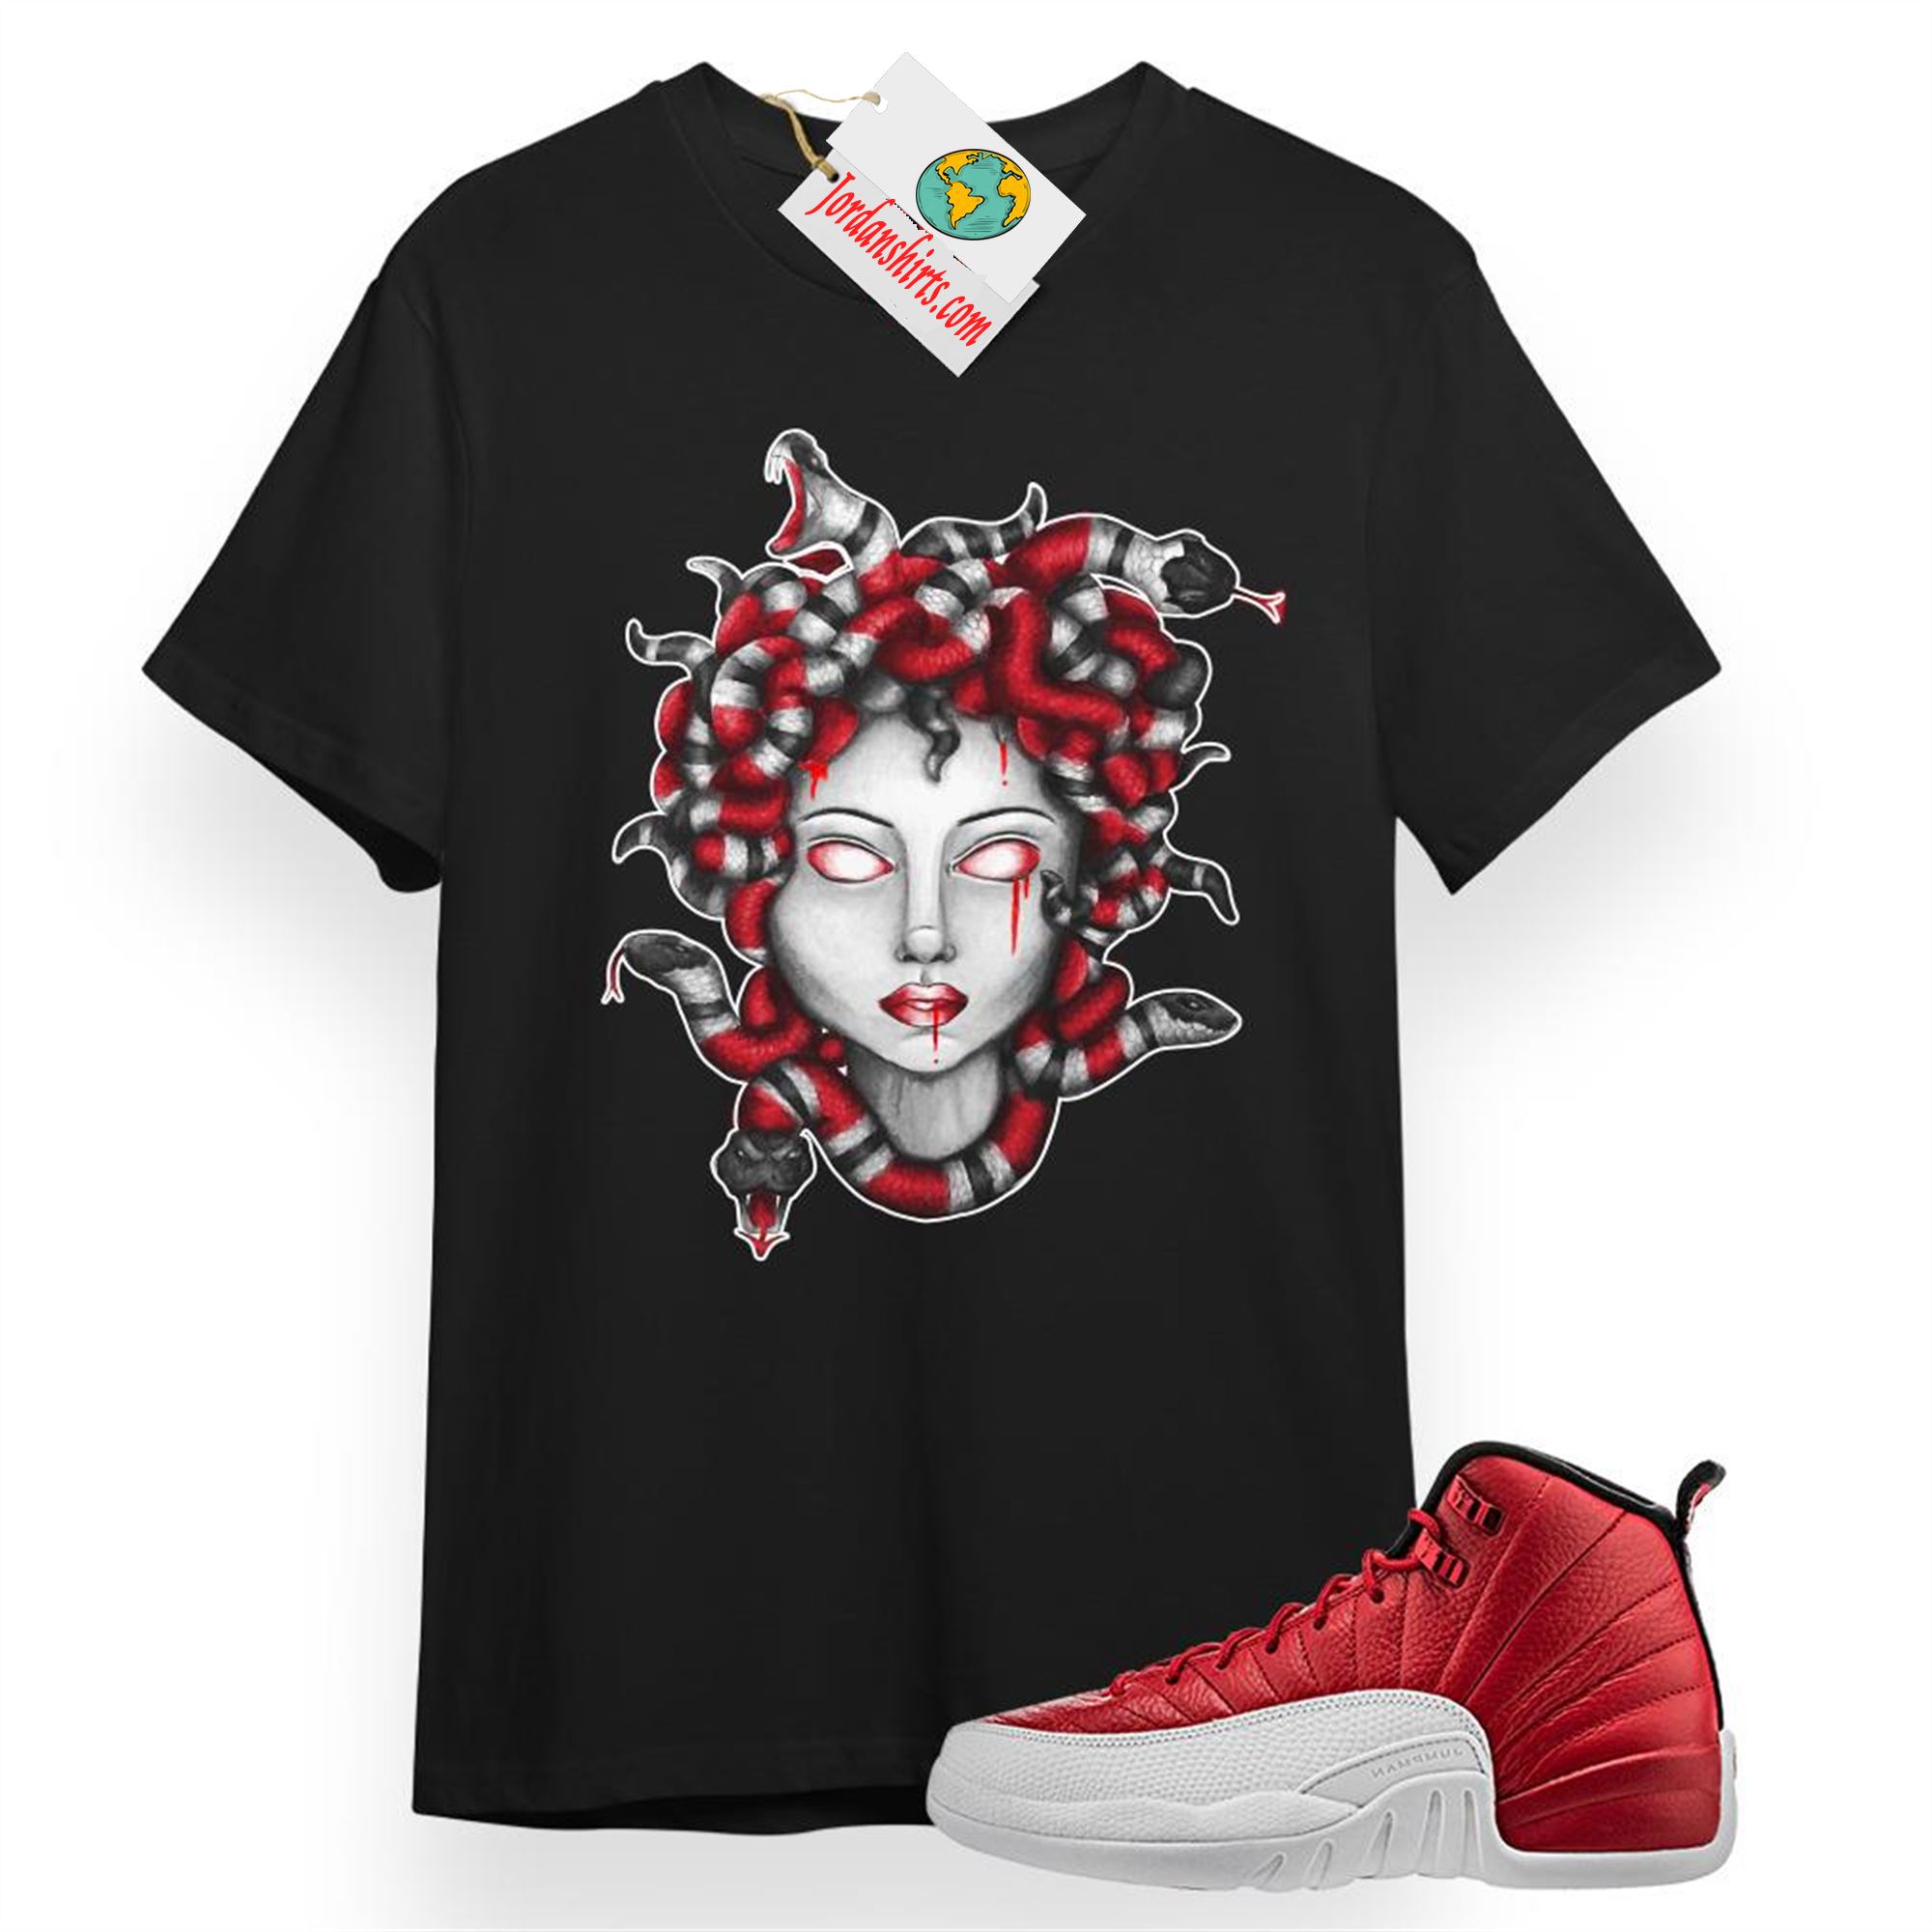 Jordan 12 Shirt, Medusa Snake Black T-shirt Air Jordan 12 Gym Red 12s Plus Size Up To 5xl